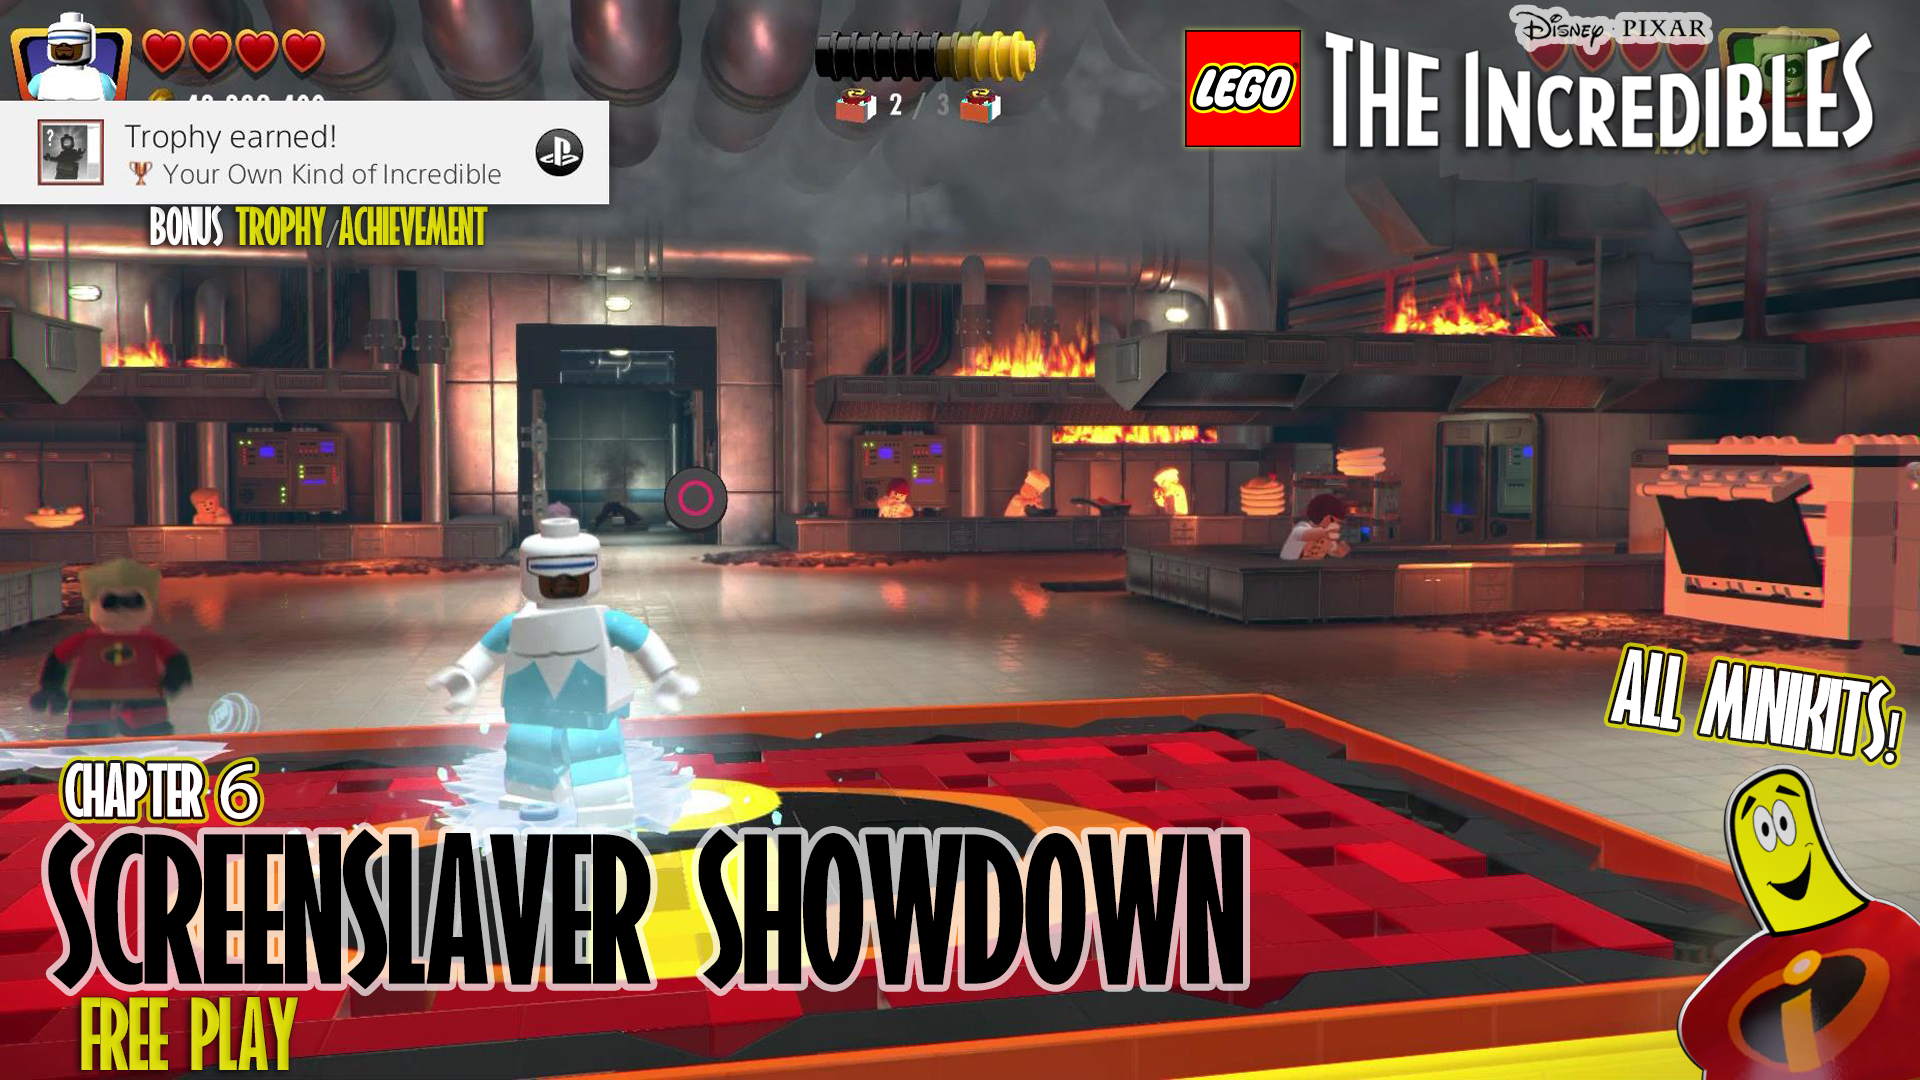 Lego The Incredibles: Screenslaver Showdown FREE PLAY (All 10 Minikits) – HTG